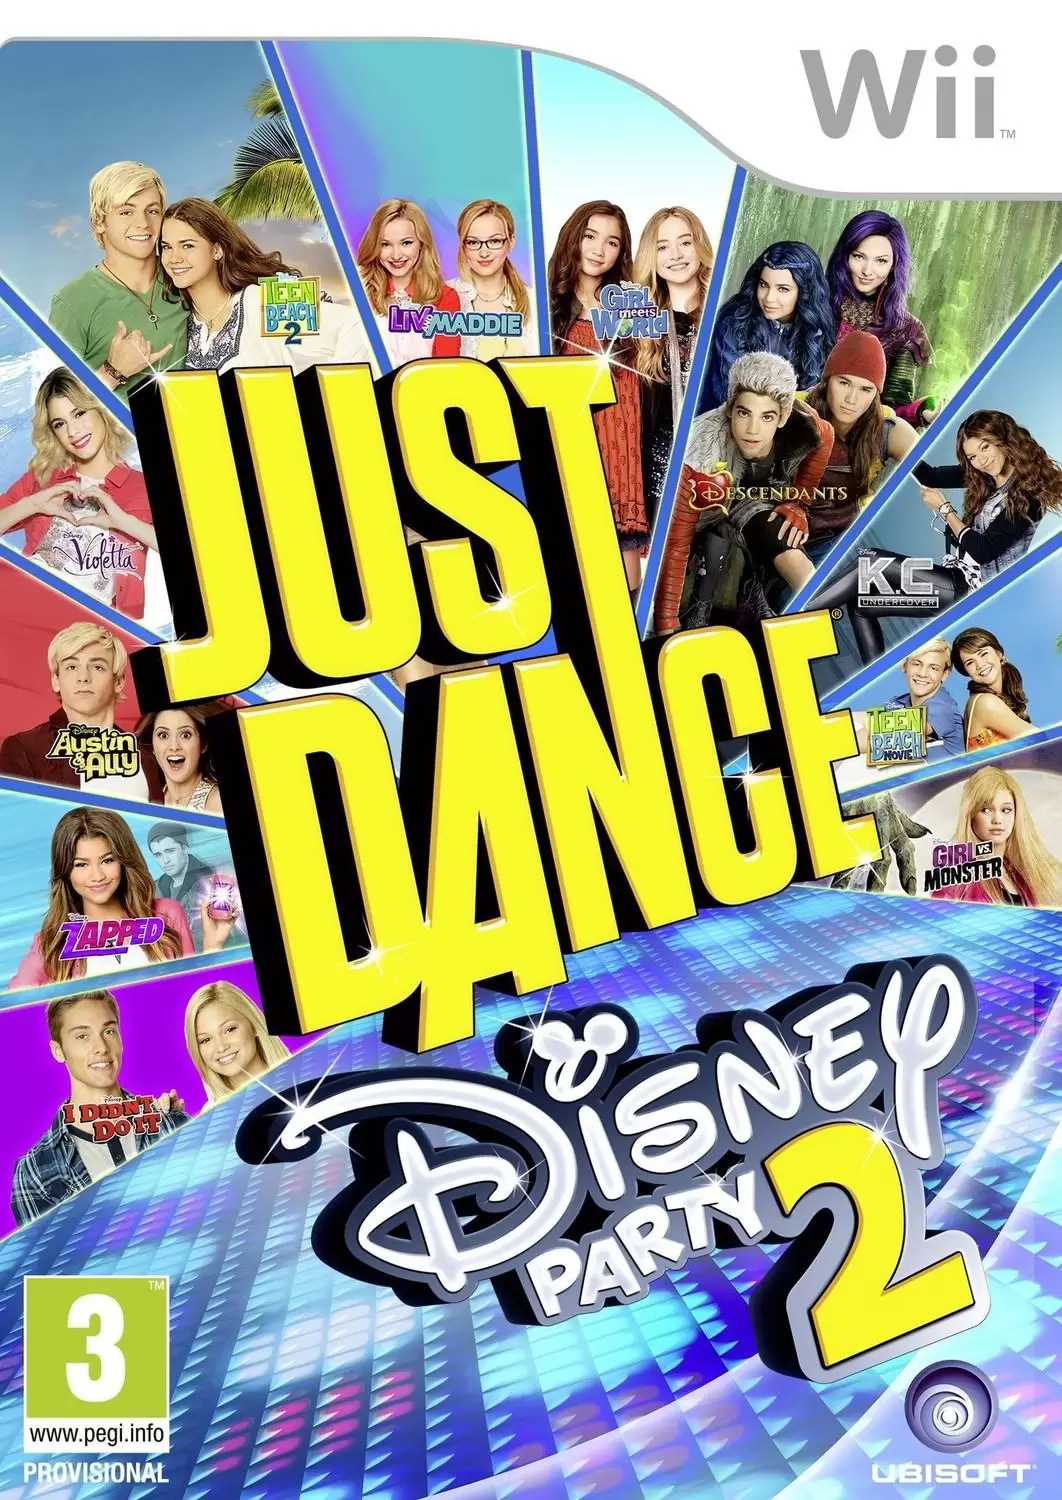 Nintendo Wii Games - Just Dance: Disney Party 2